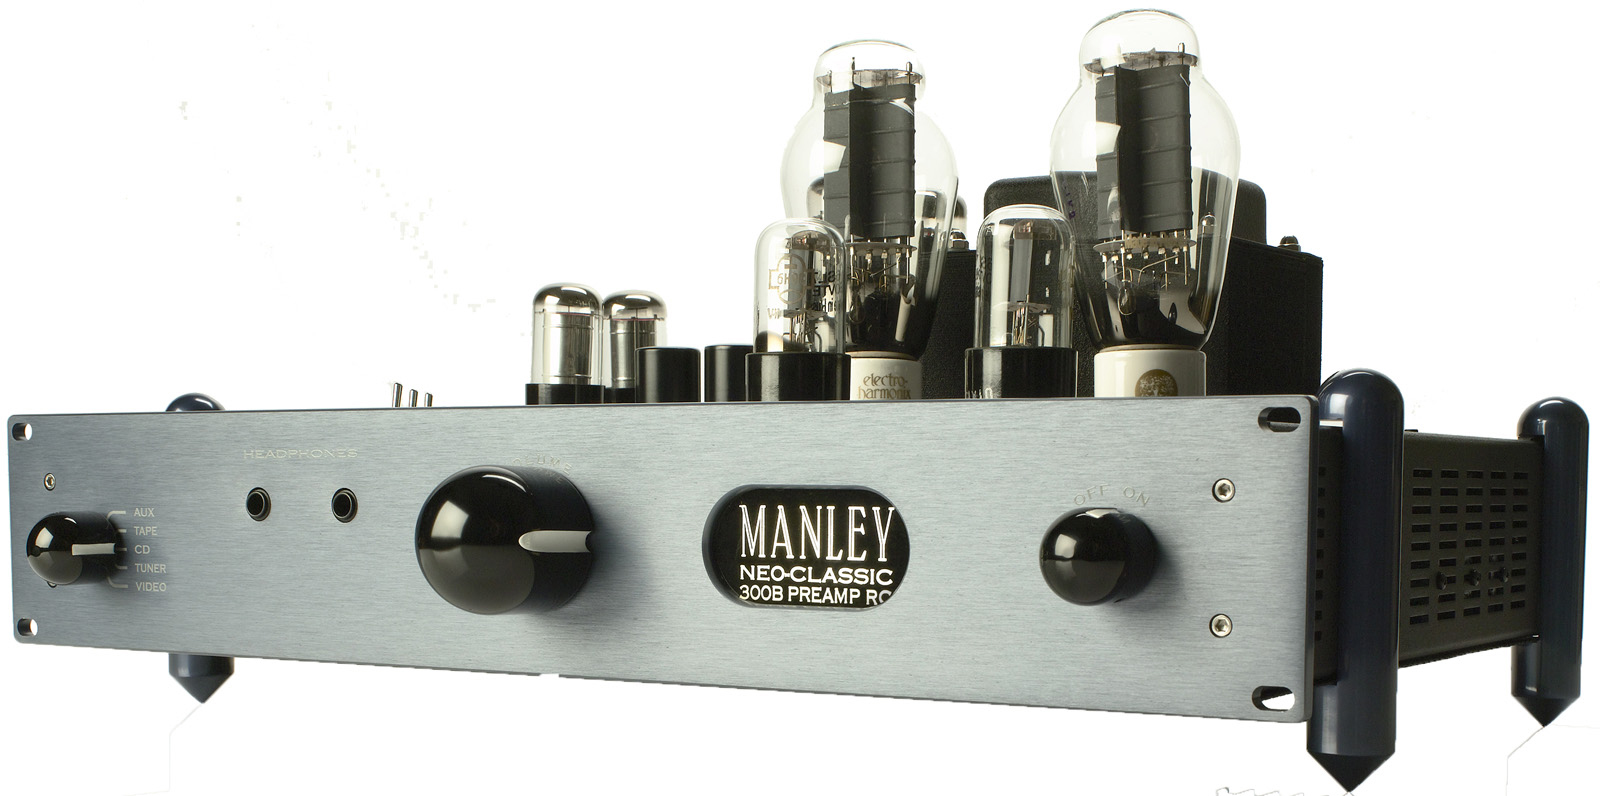 Manley Neo-Classic 300B RC